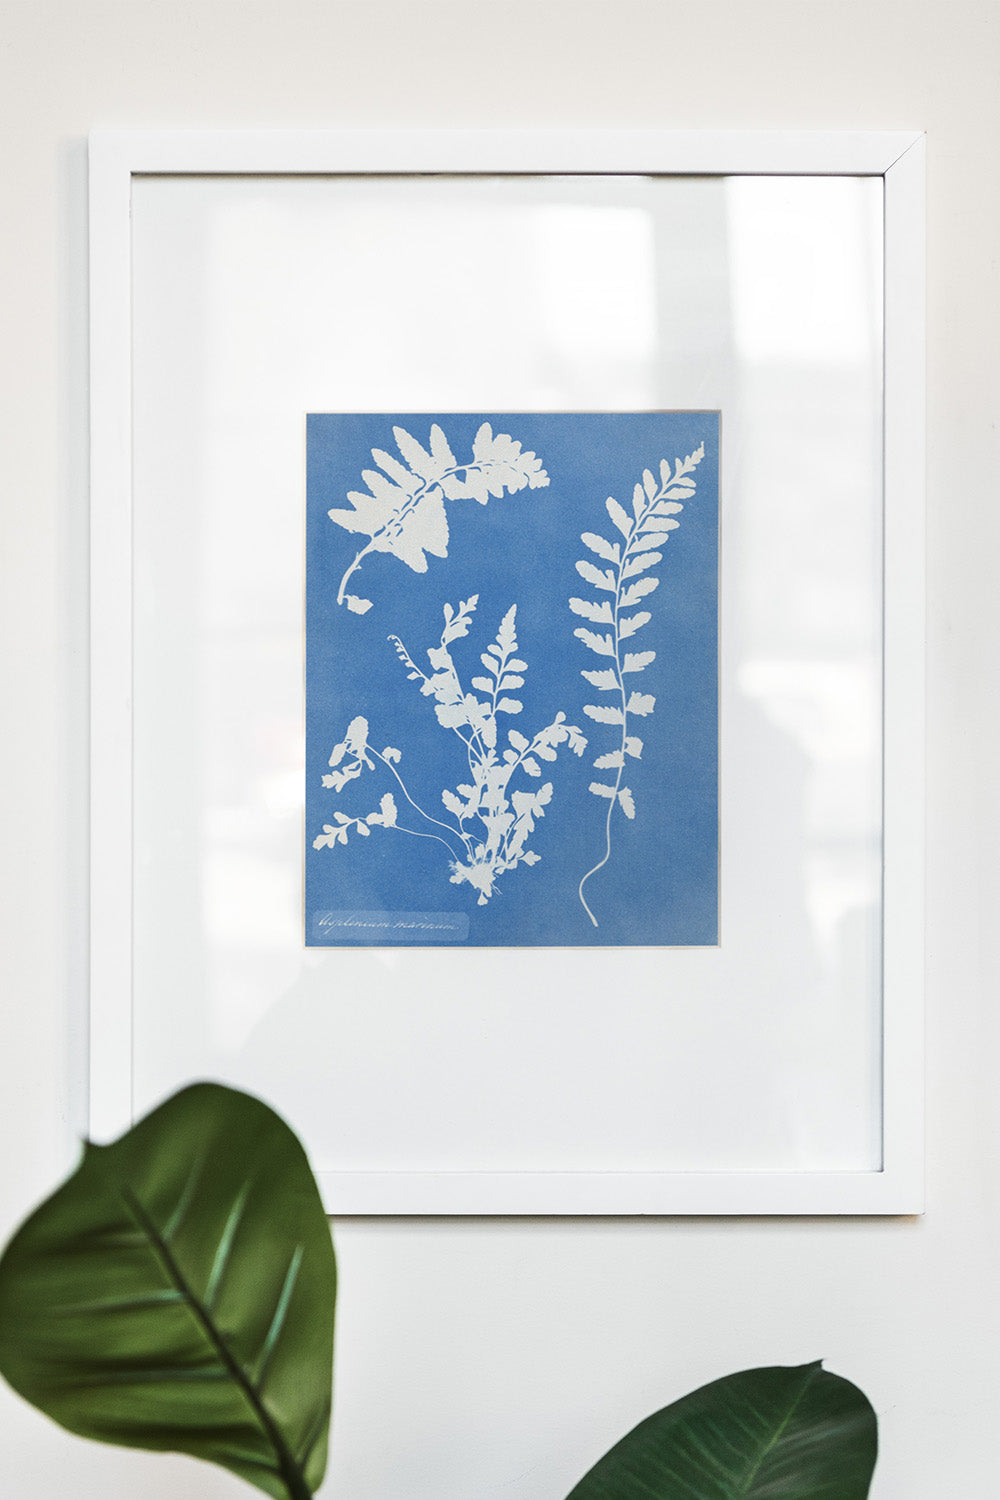 Anna Atkins' cyanotype art print showcasing detailed plant imagery.